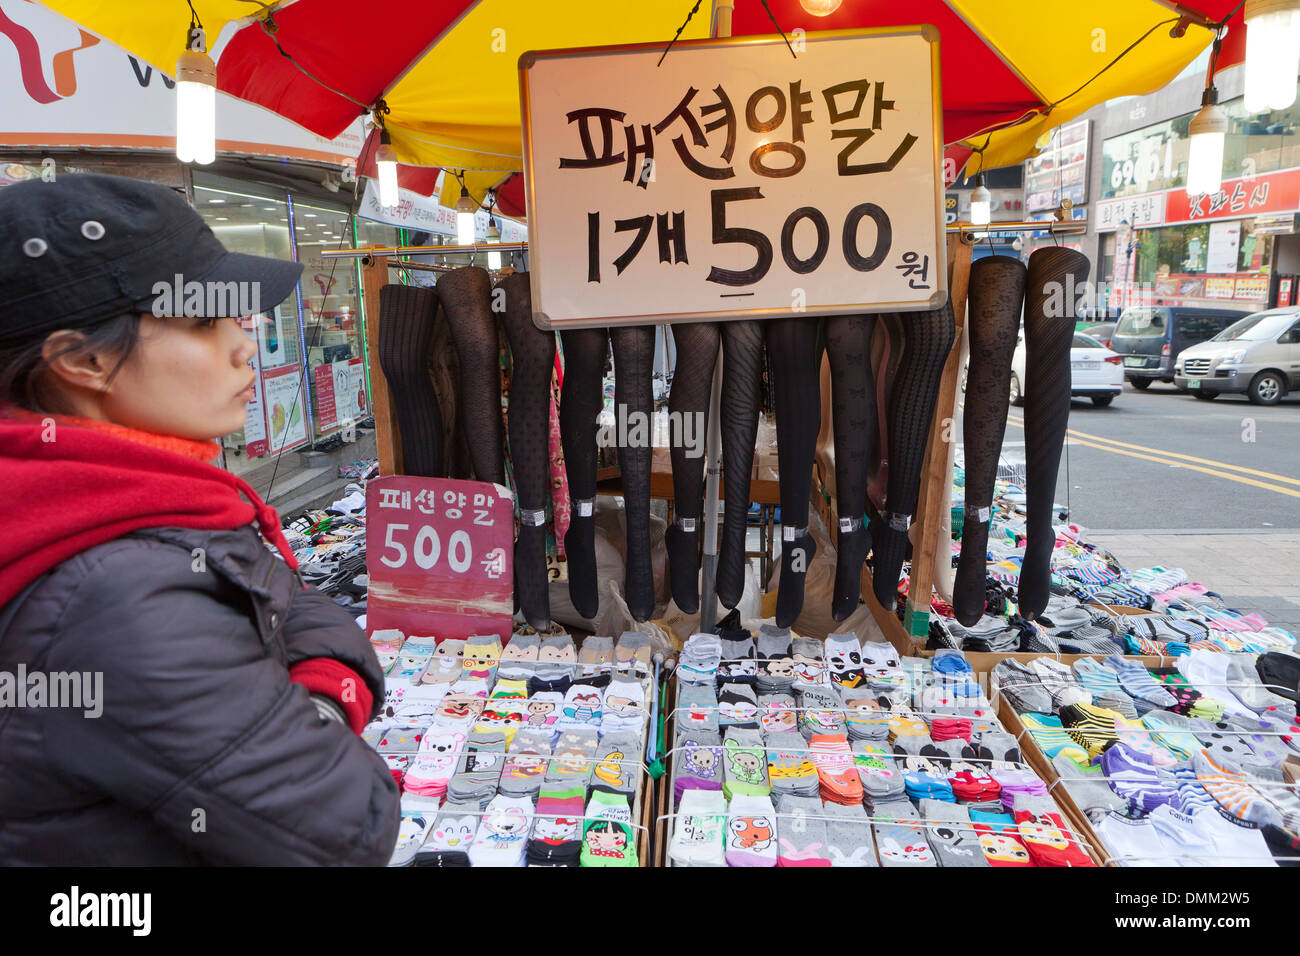 Socks and stockings street vendor stand - Busan, South Korea Stock Photo